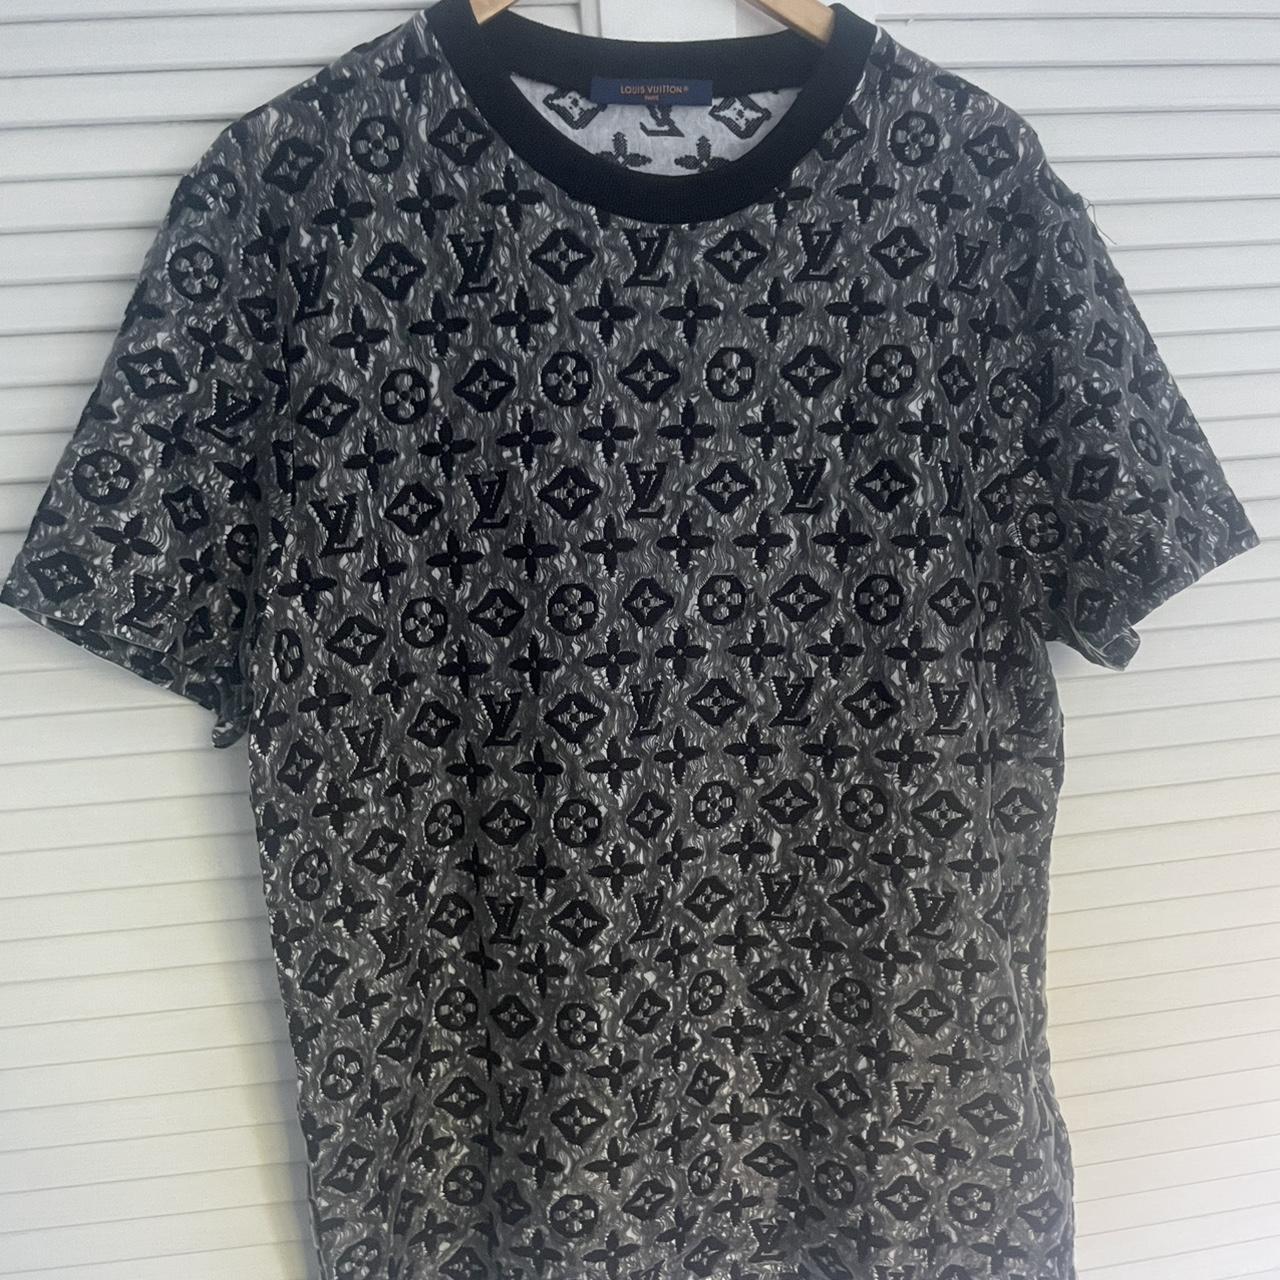 Black/White/Grey LVSE Monogram T-Shirt Worn Once - Depop